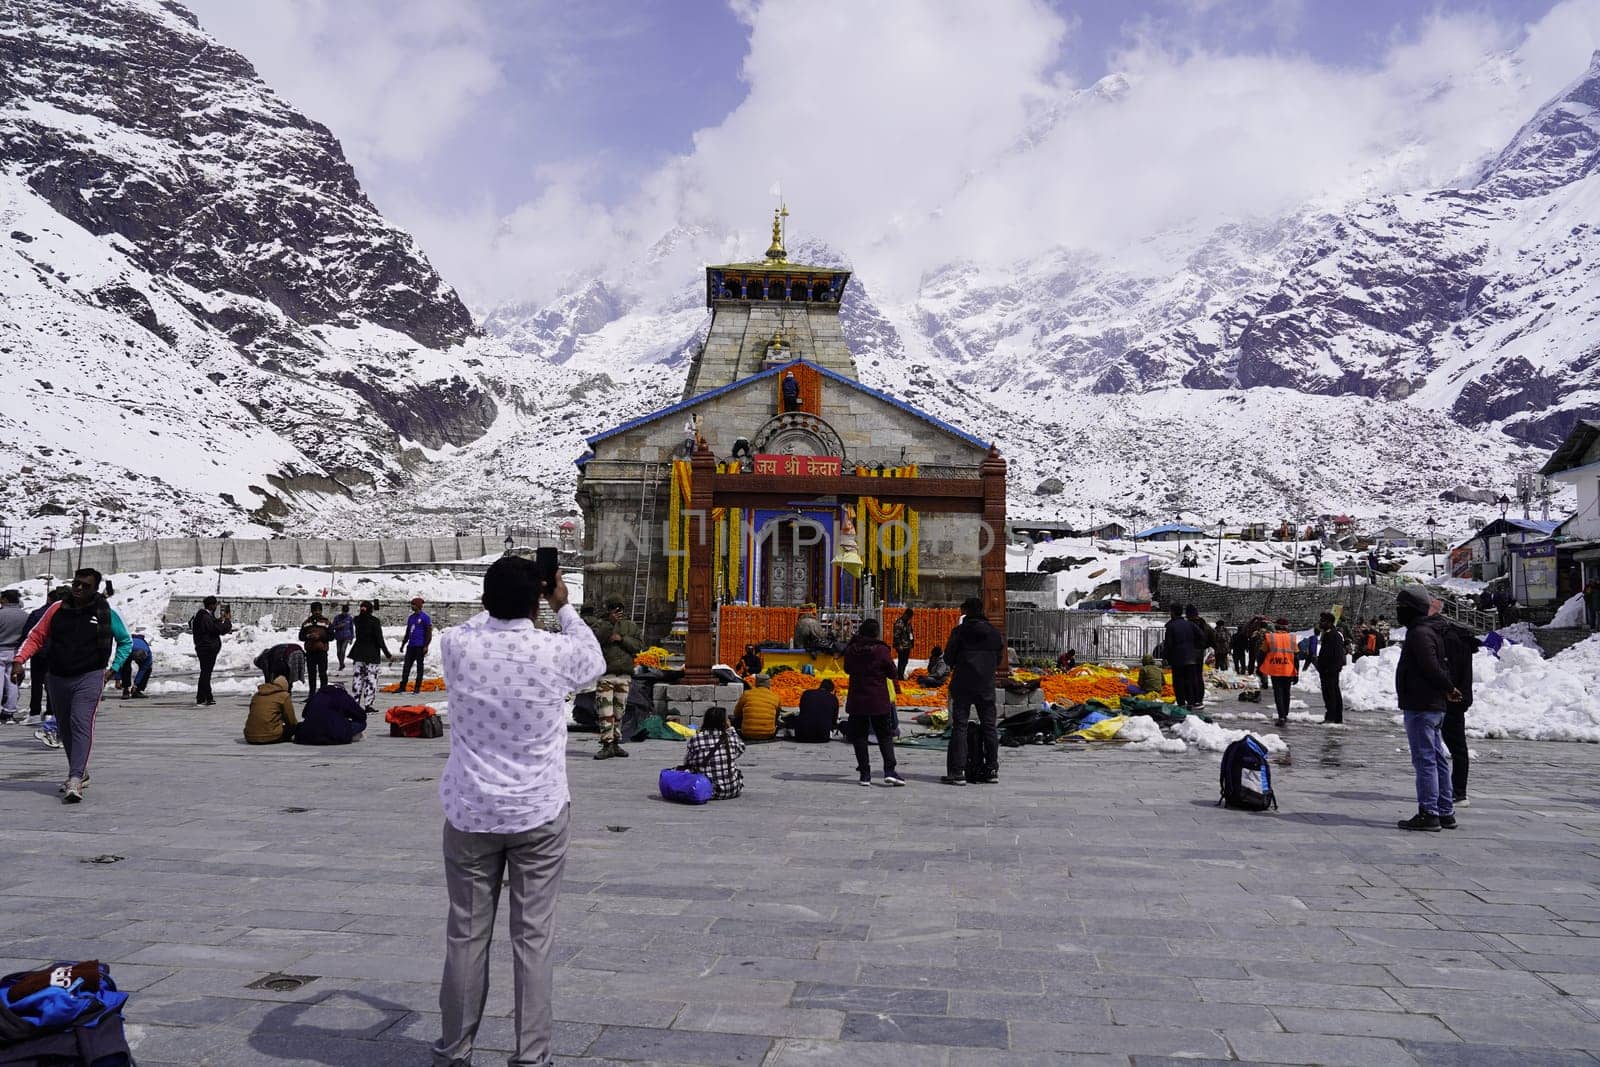 Capturing the Beauty of Kedarnath Temple in Uttarakhand by stocksvids